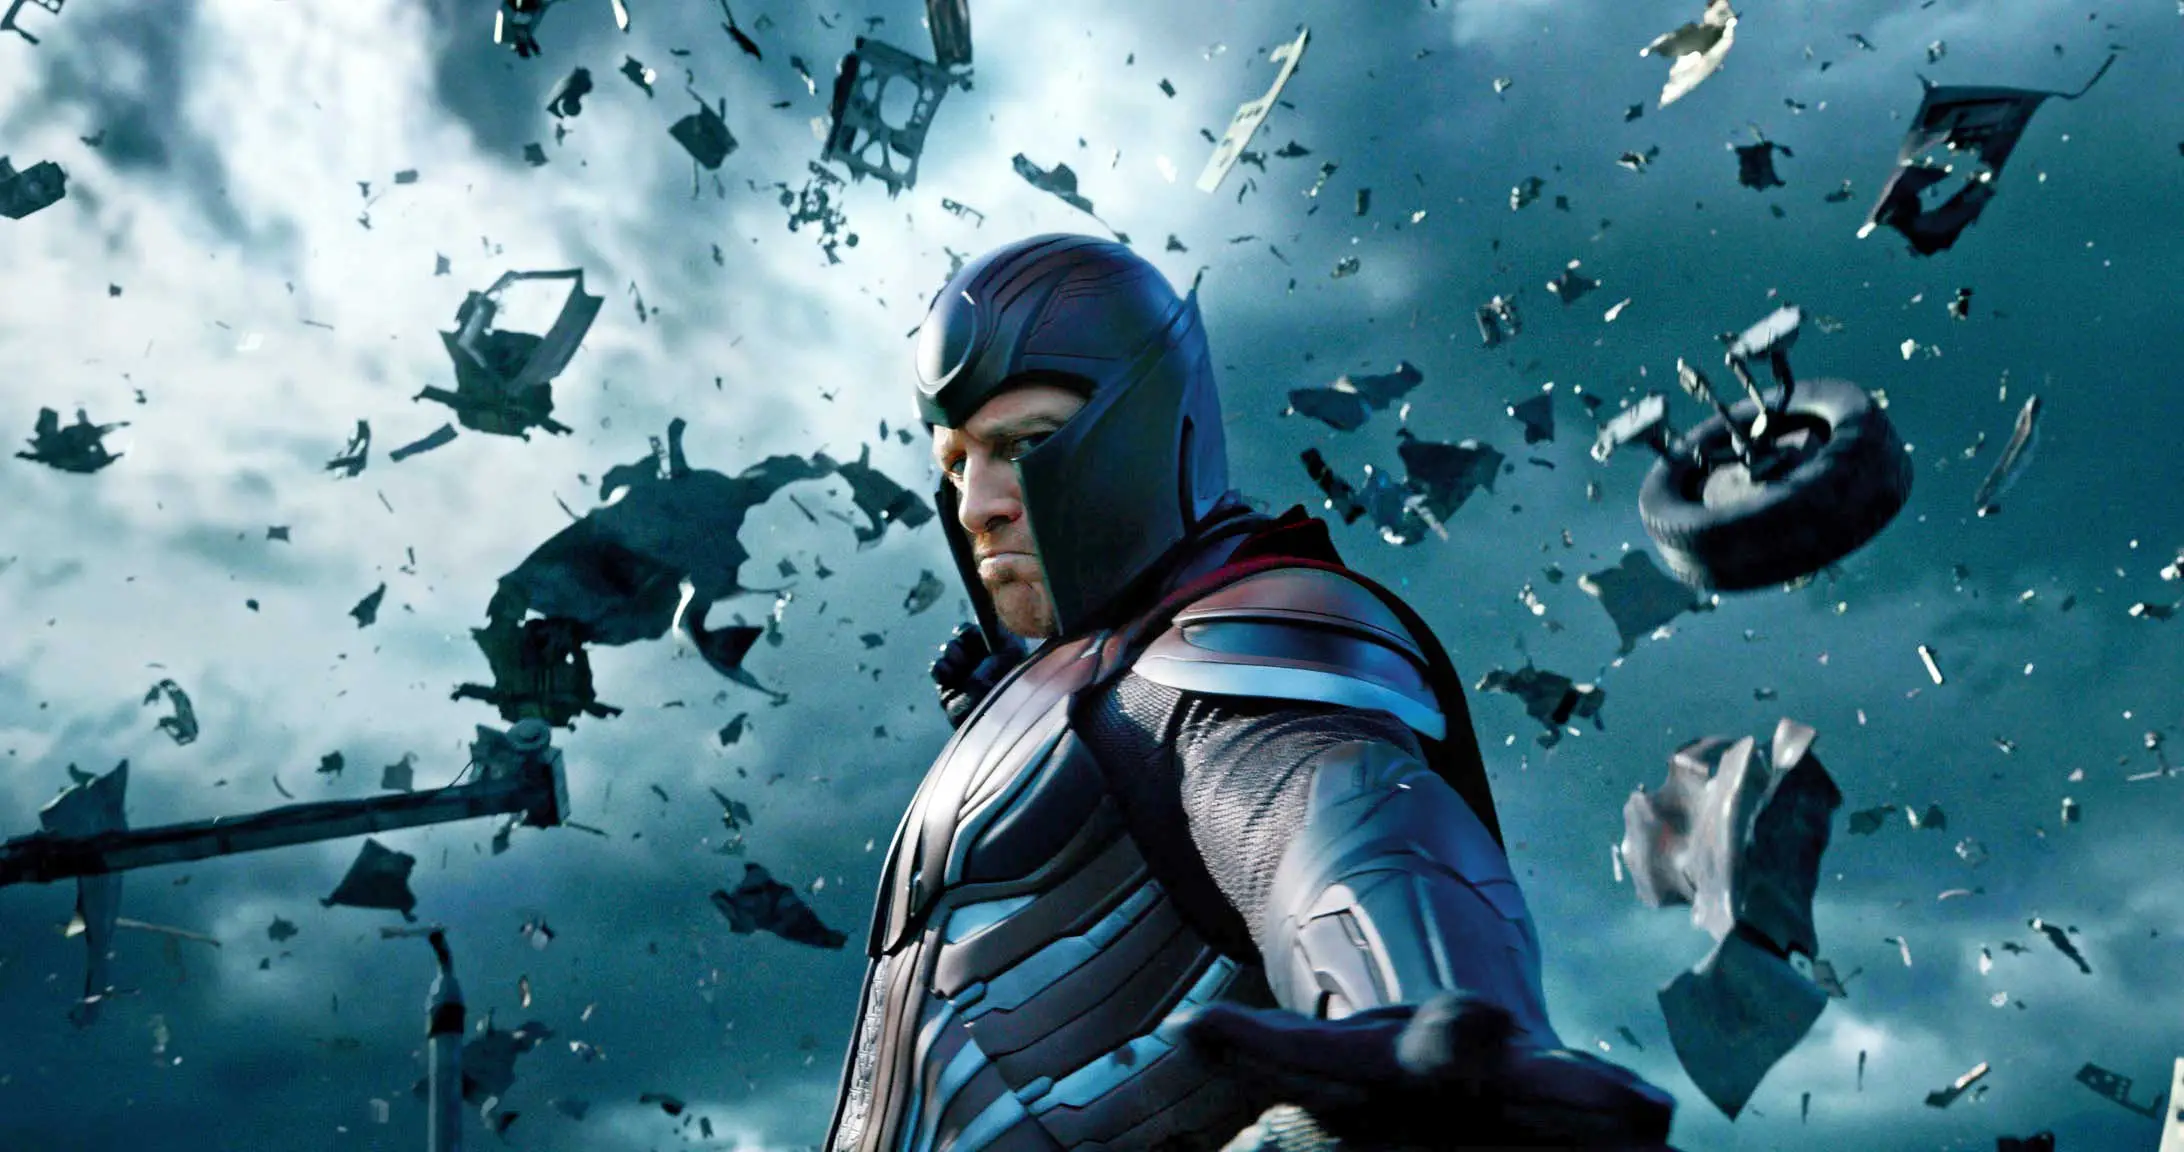 Magneto - X-Men Apocalypse - Michael Fassbender